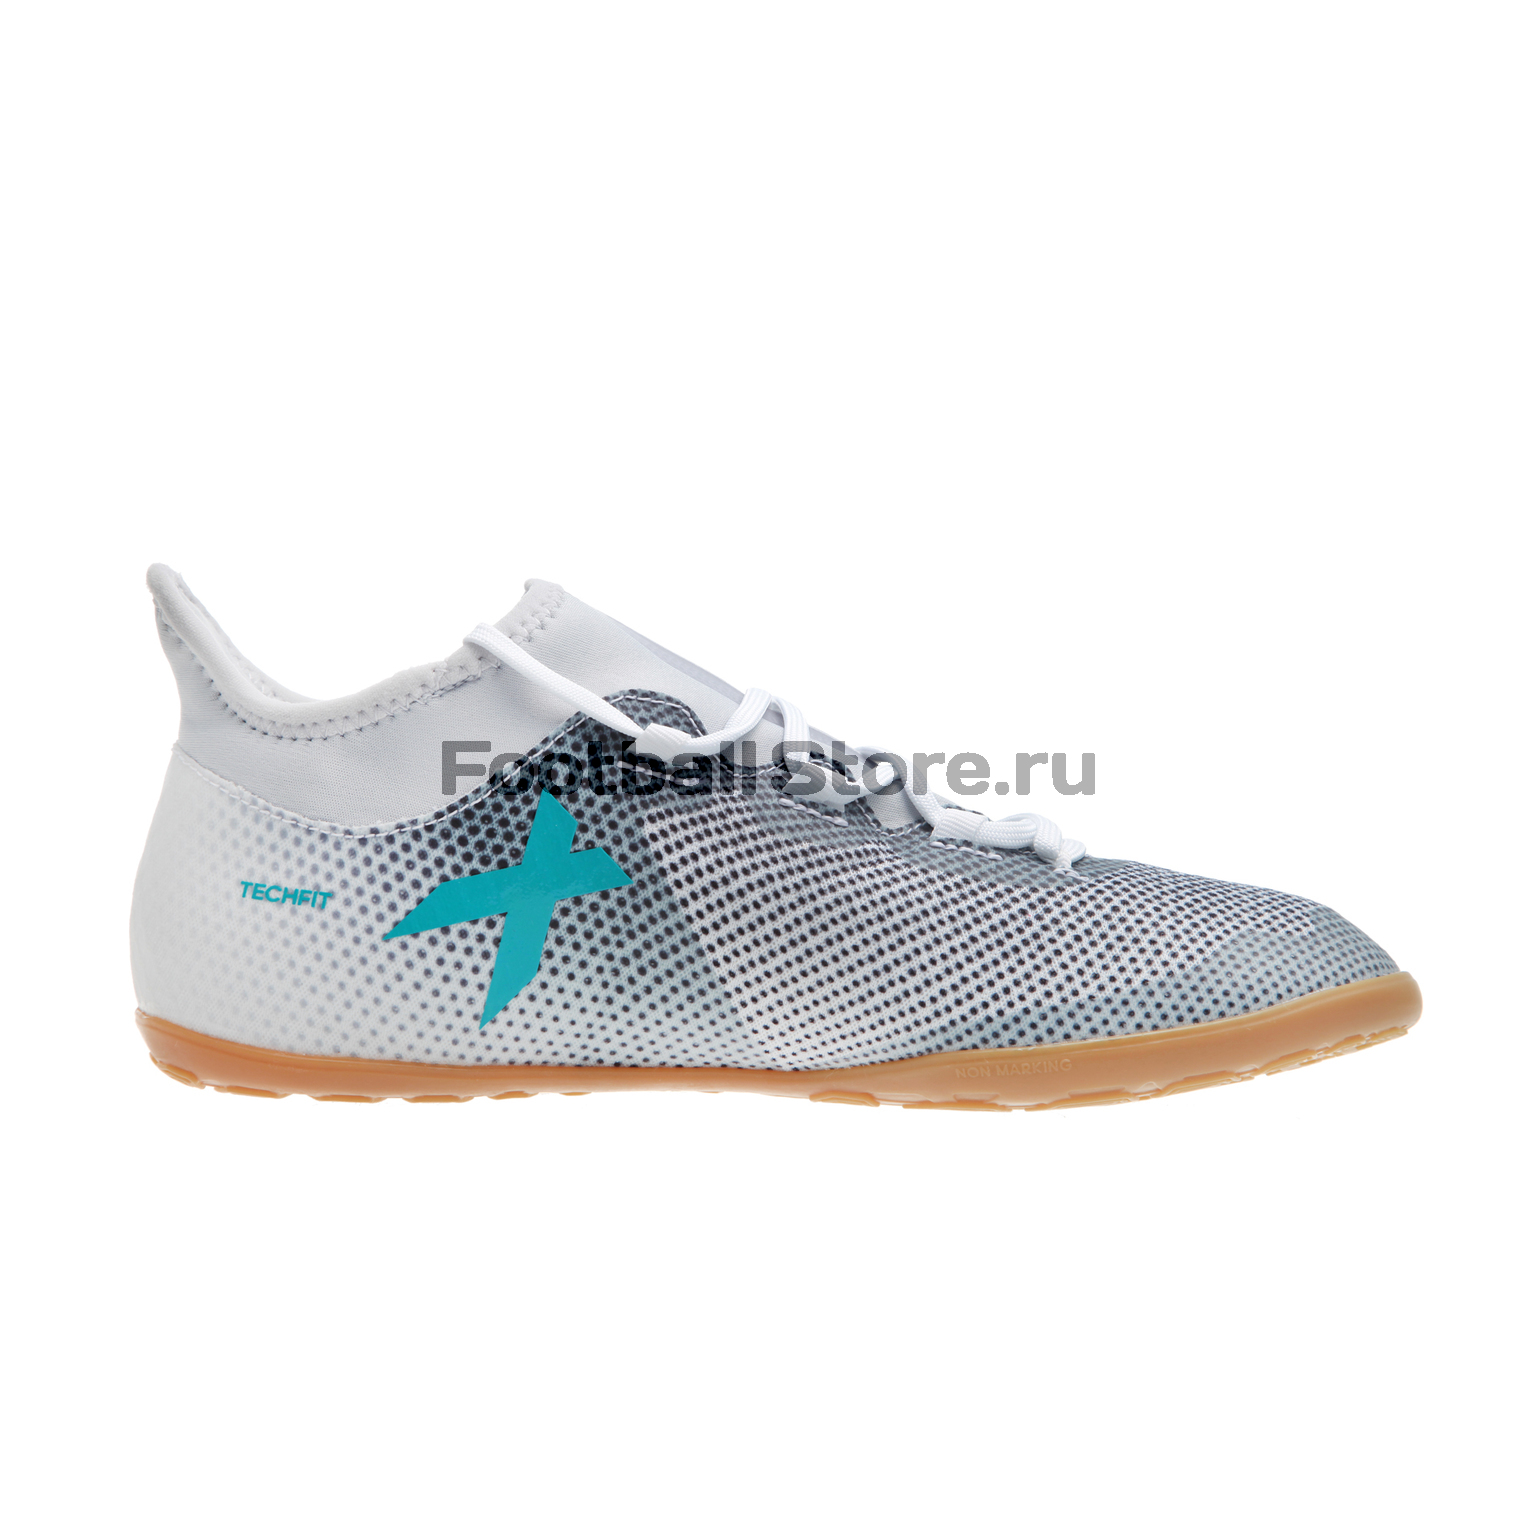 Обувь для зала Adidas X Tango 17.3 IN CG3715